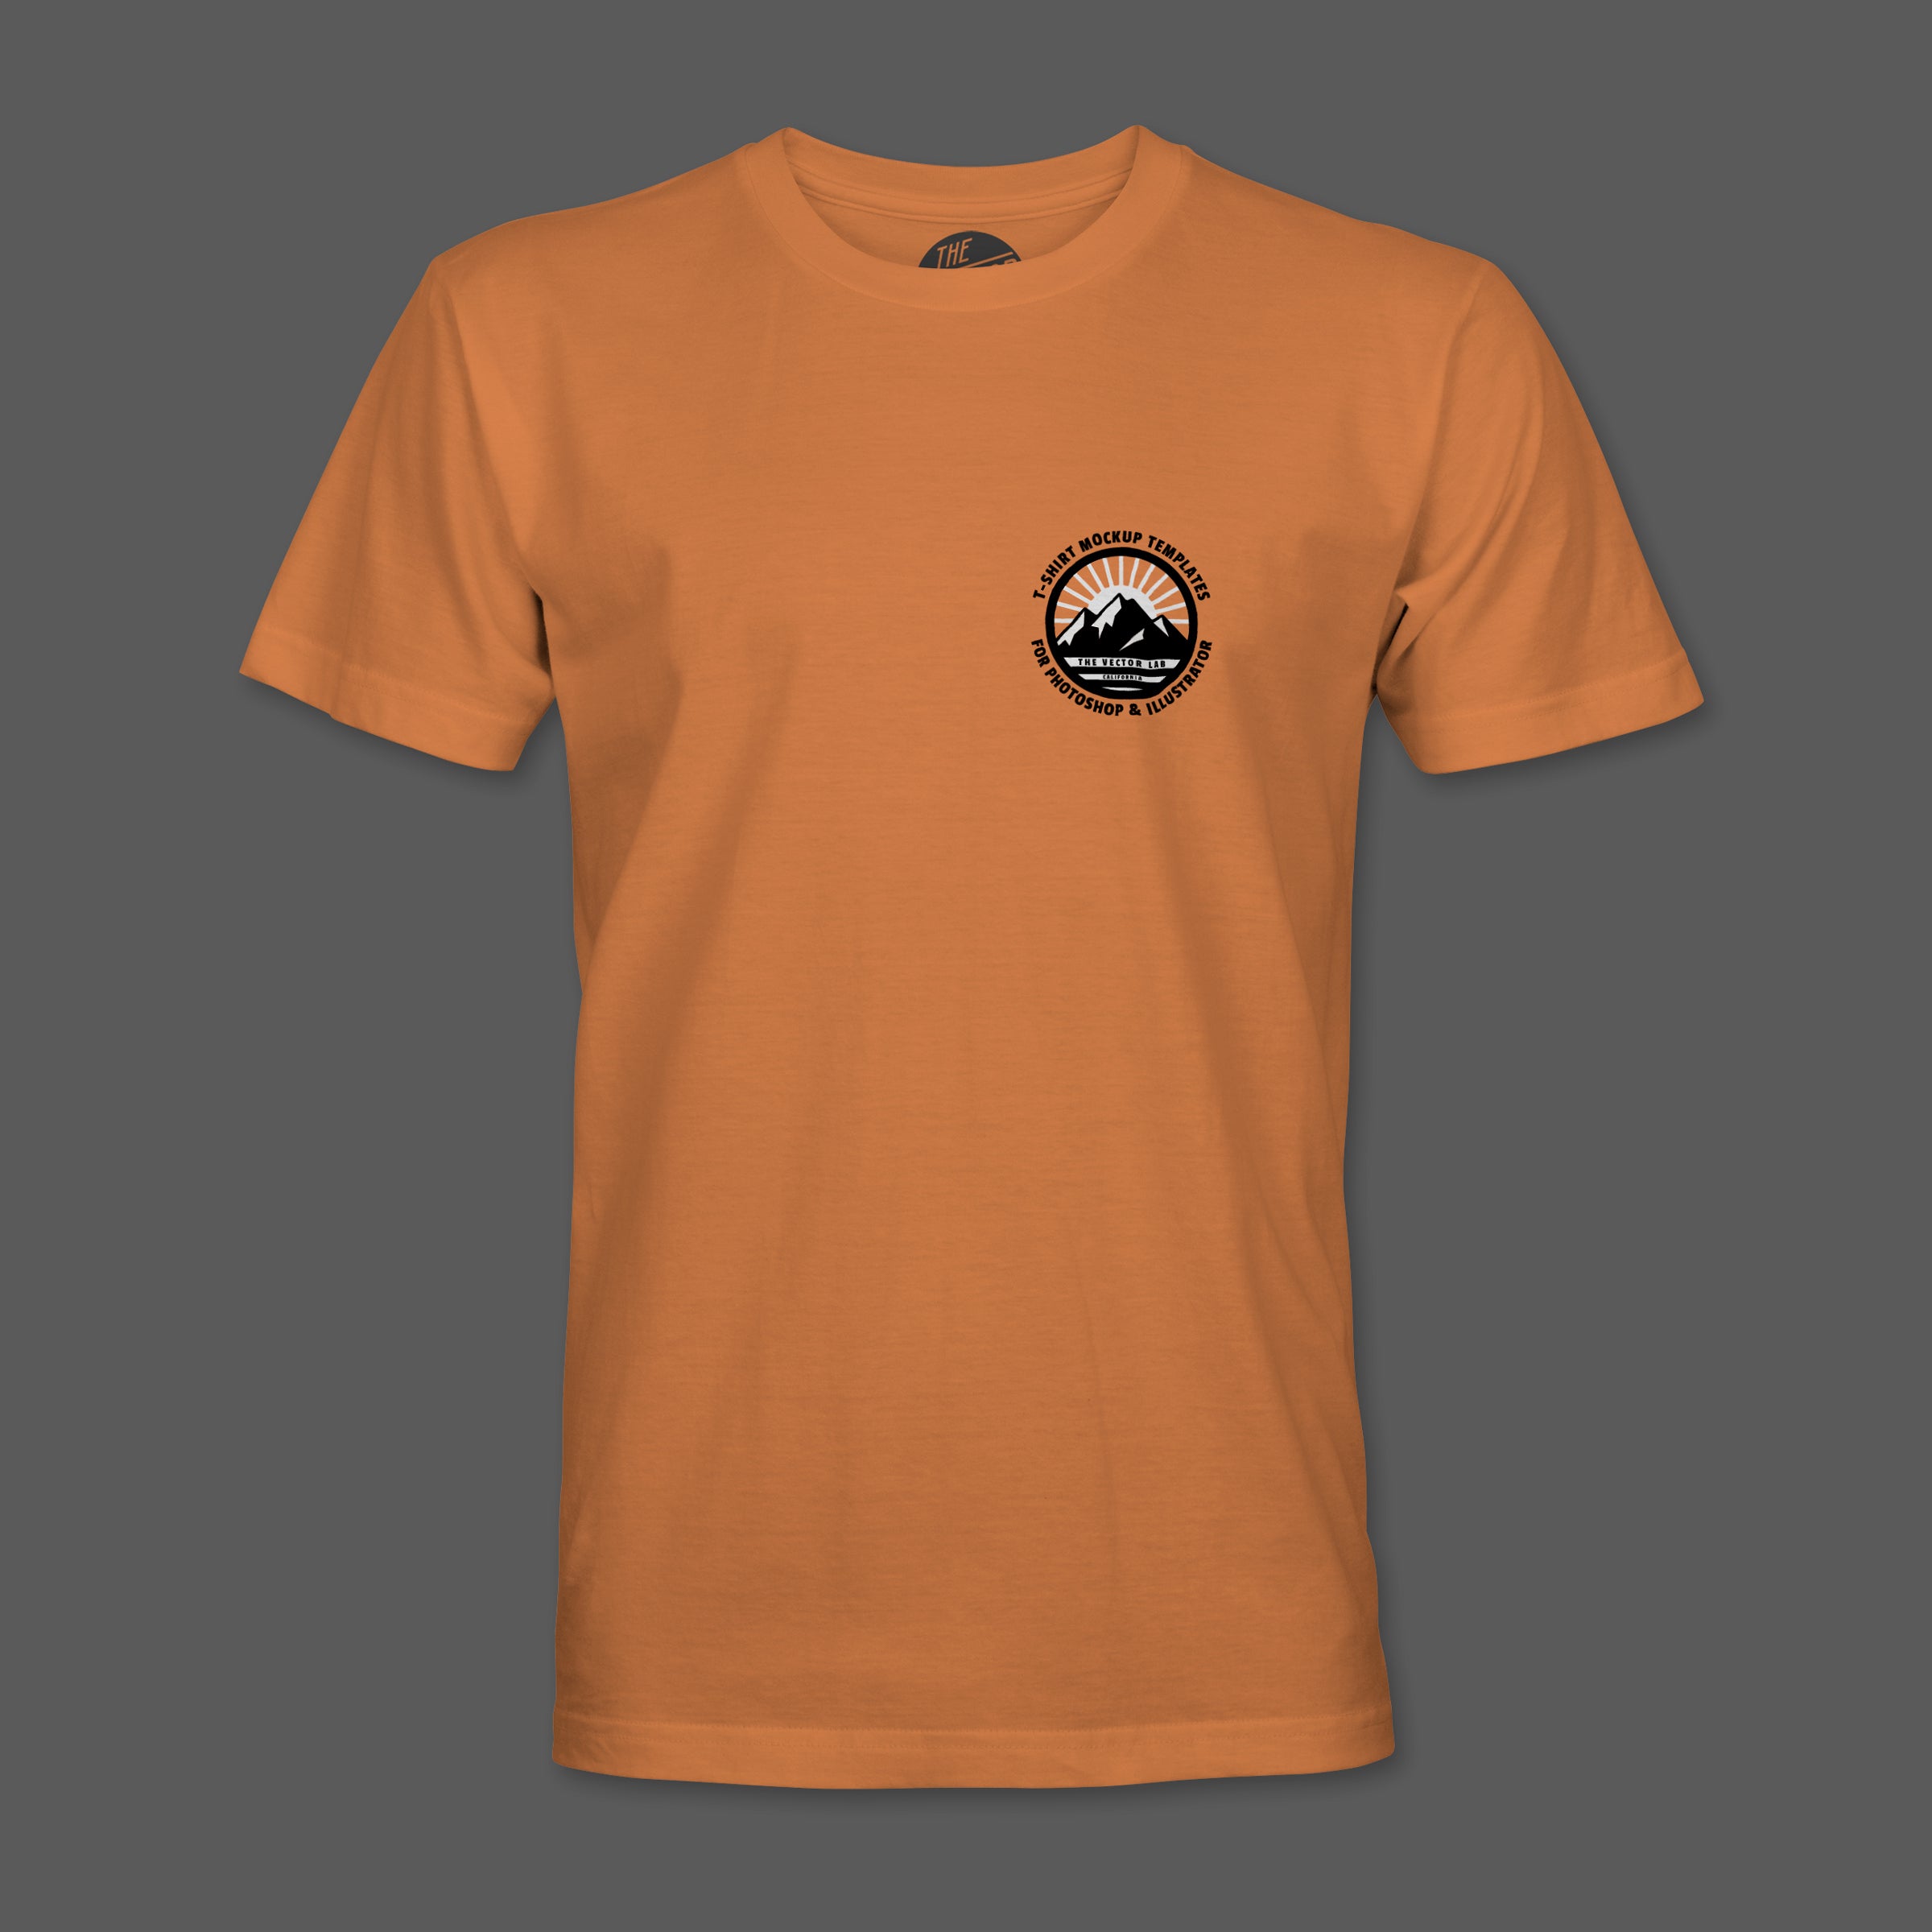 Men's T-Shirt Mockup Templates (Version 5.0) - TheVectorLab